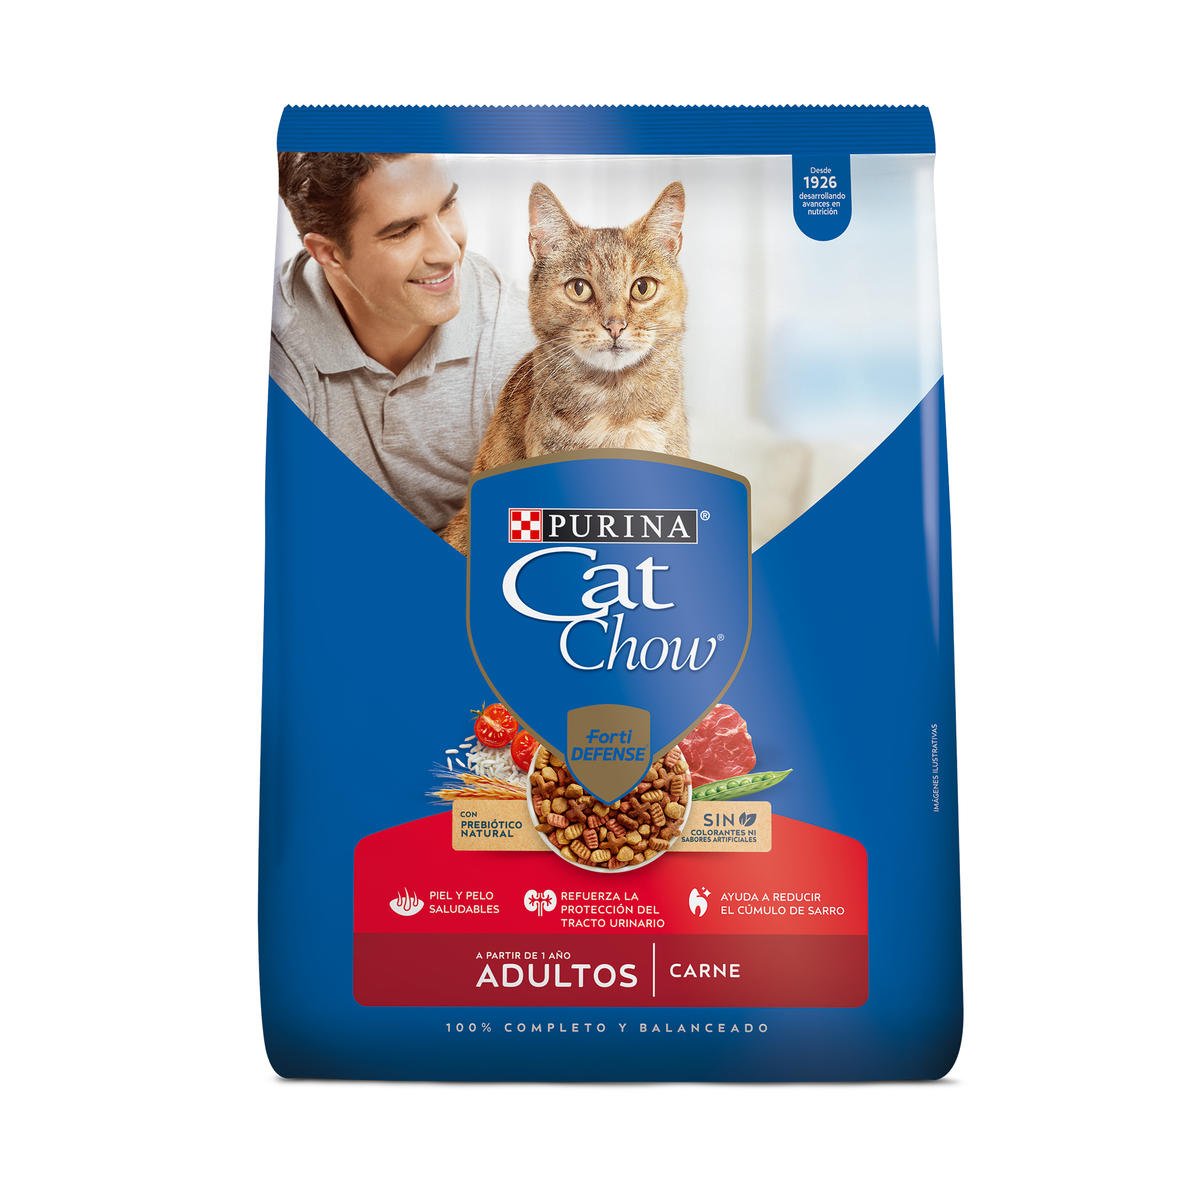 Purina Cat Chow Adultos Activos Carne - Alimento para Gatos